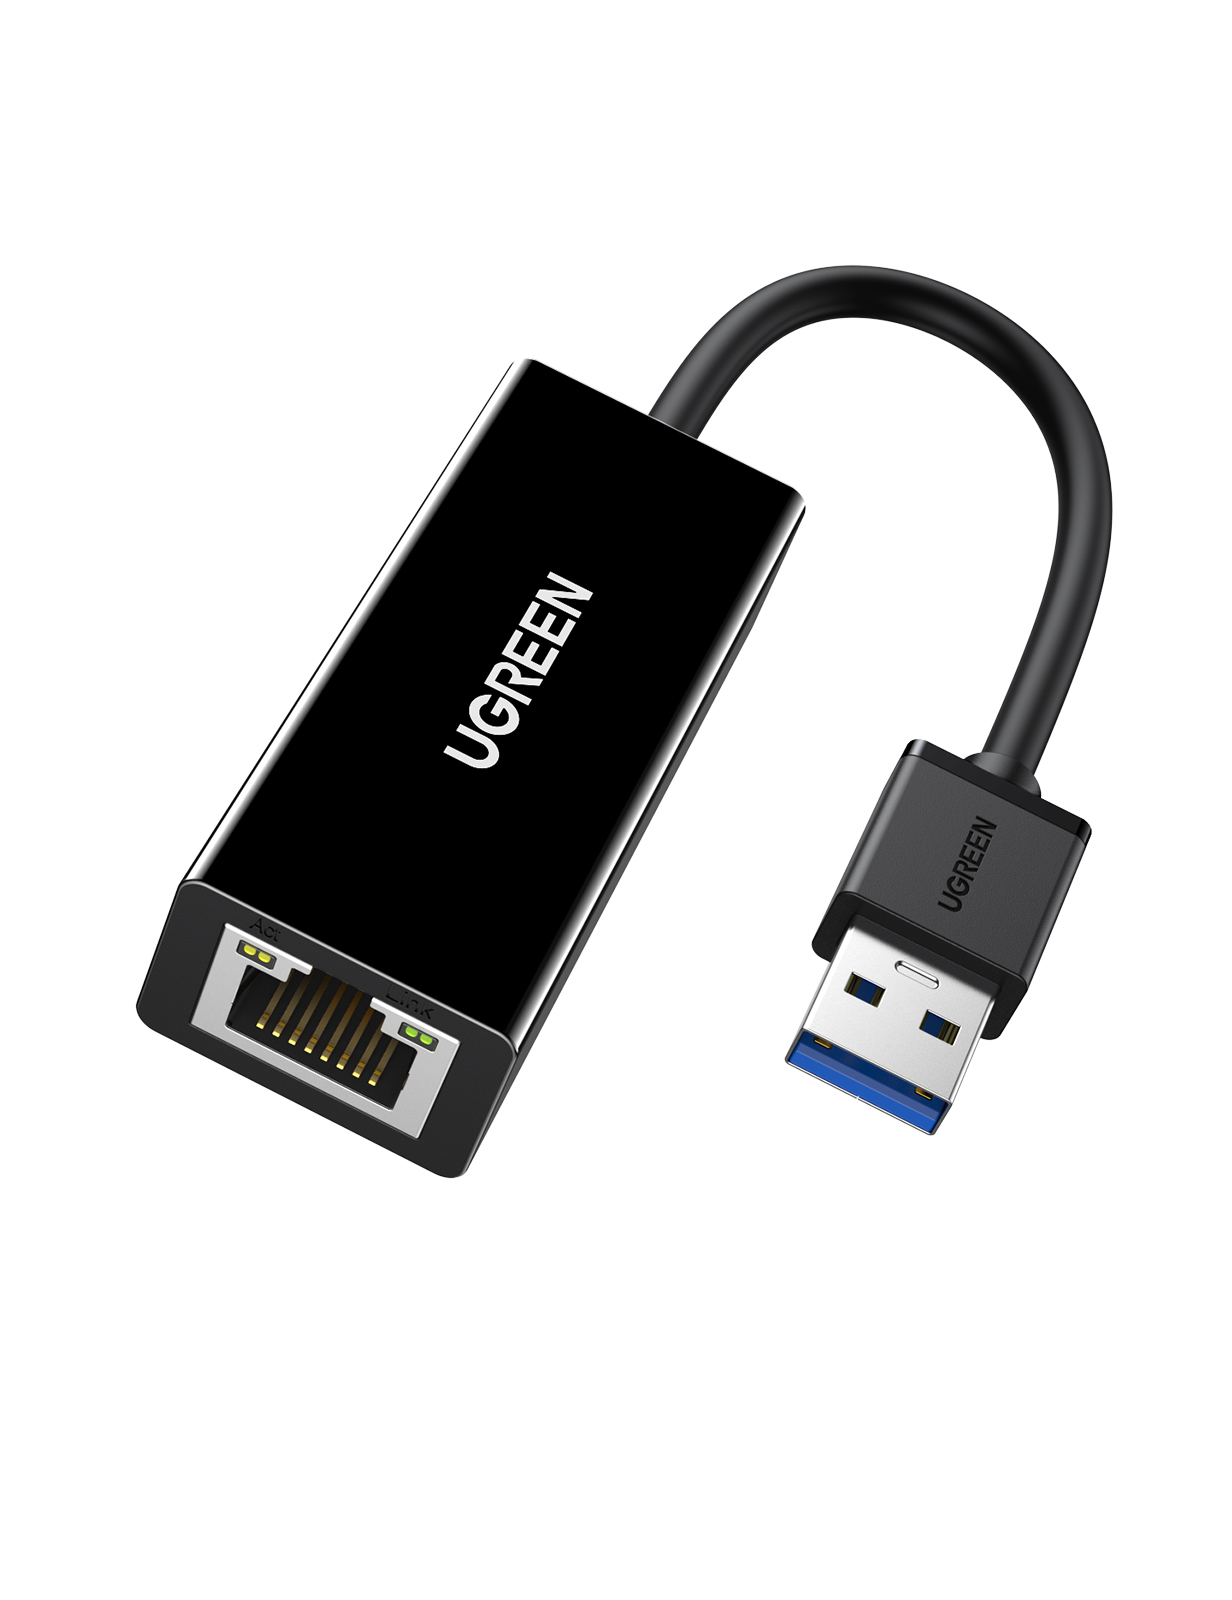 UGREEN USB 3.0 Gigabit Ethernet Adapter (Black) - OPENED BOX 73827